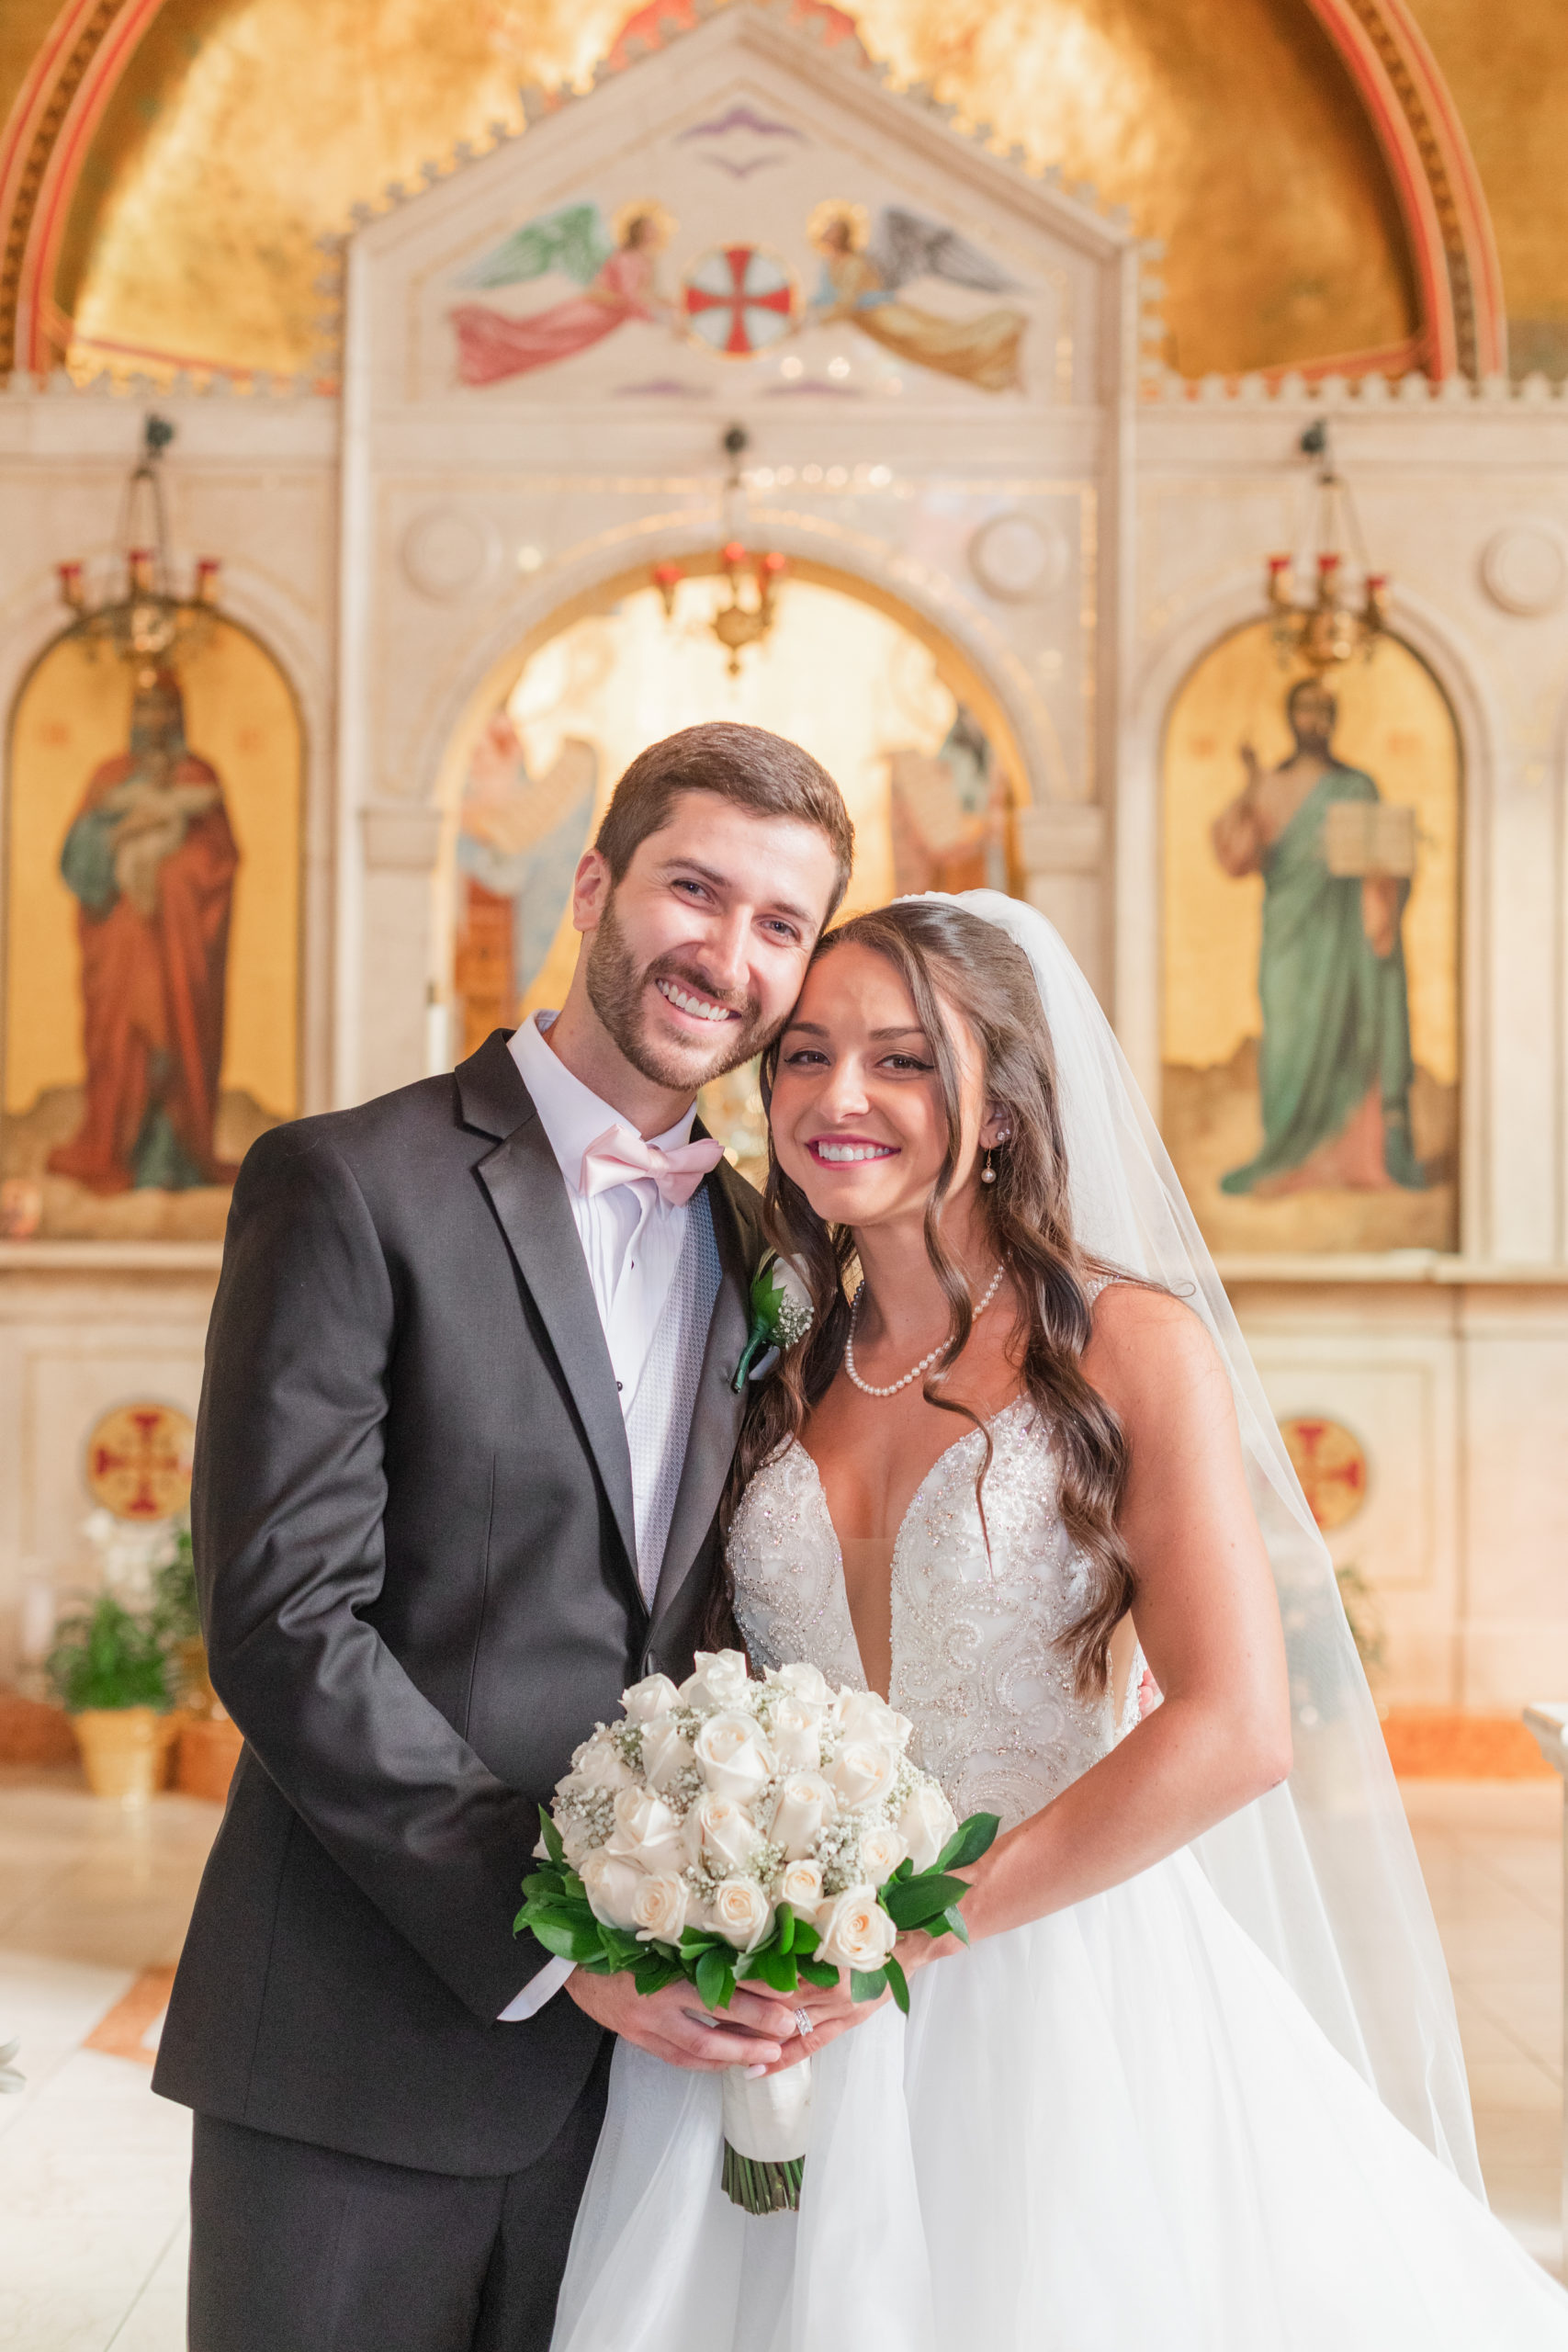 bride and groom together at greek othodox church wedding